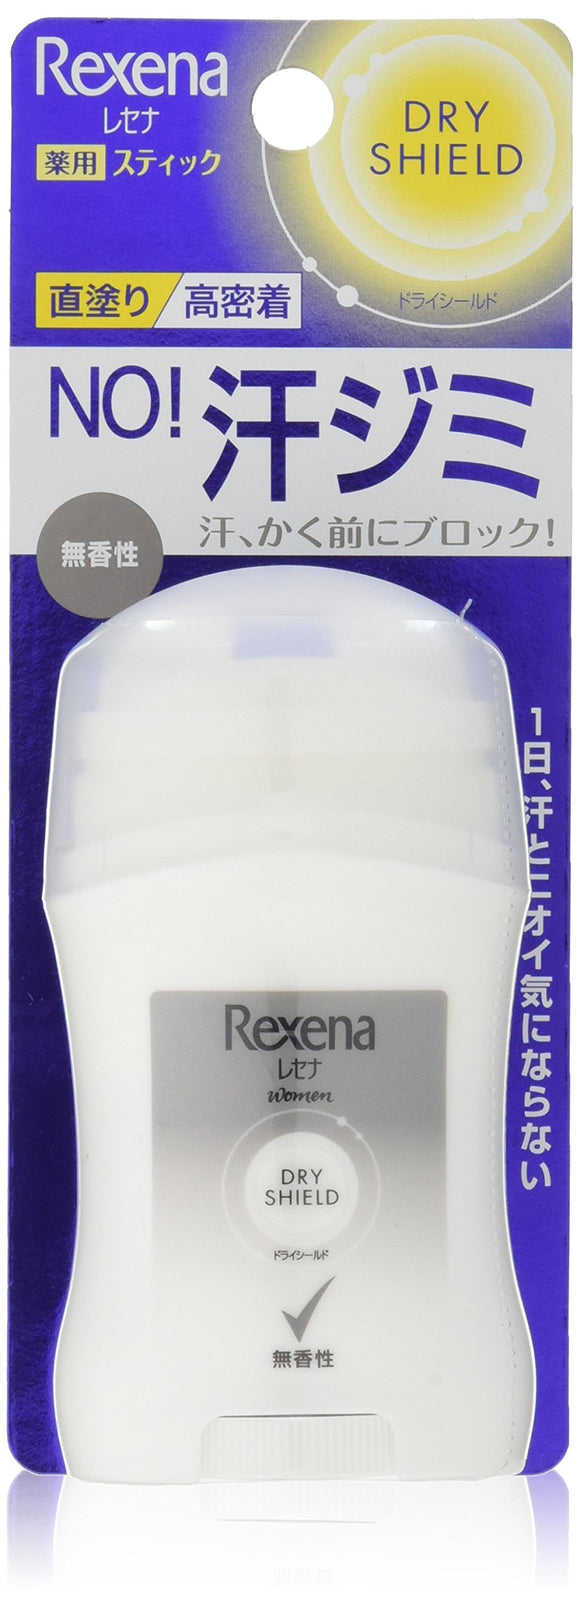 Resena Dry Shield Powder Stick Unscented Single Item 20g Antiperspirant